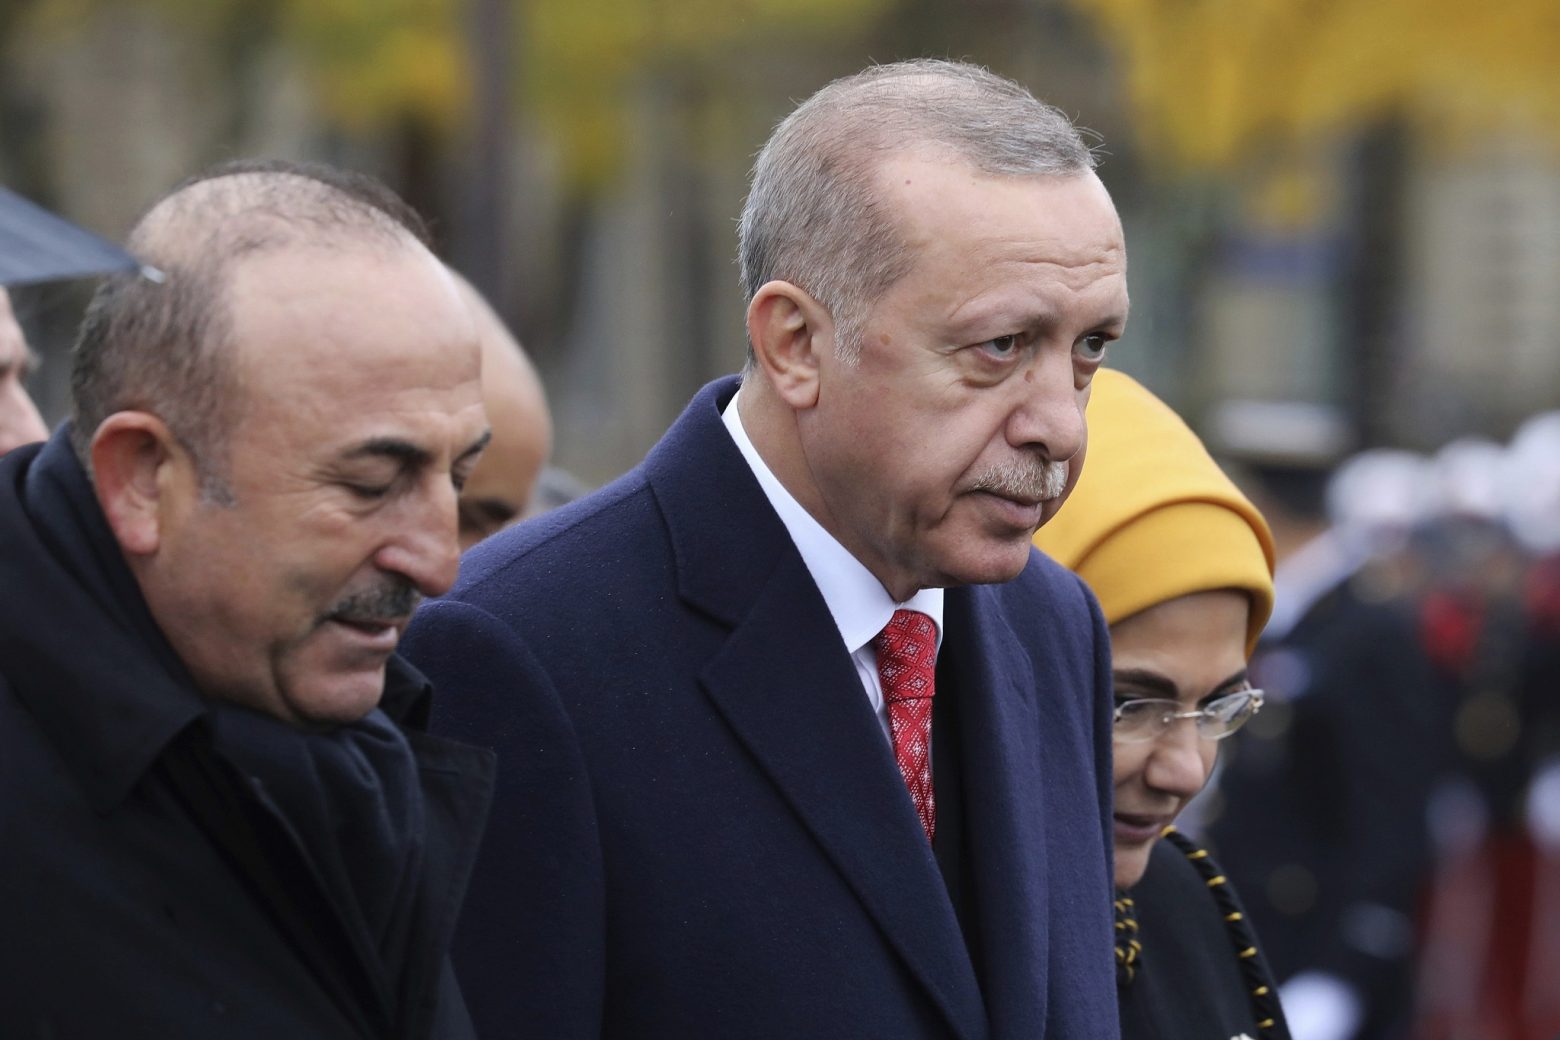 DW: Cavusoglu threatened Erdogan with resignation over decision to expel ambassadors